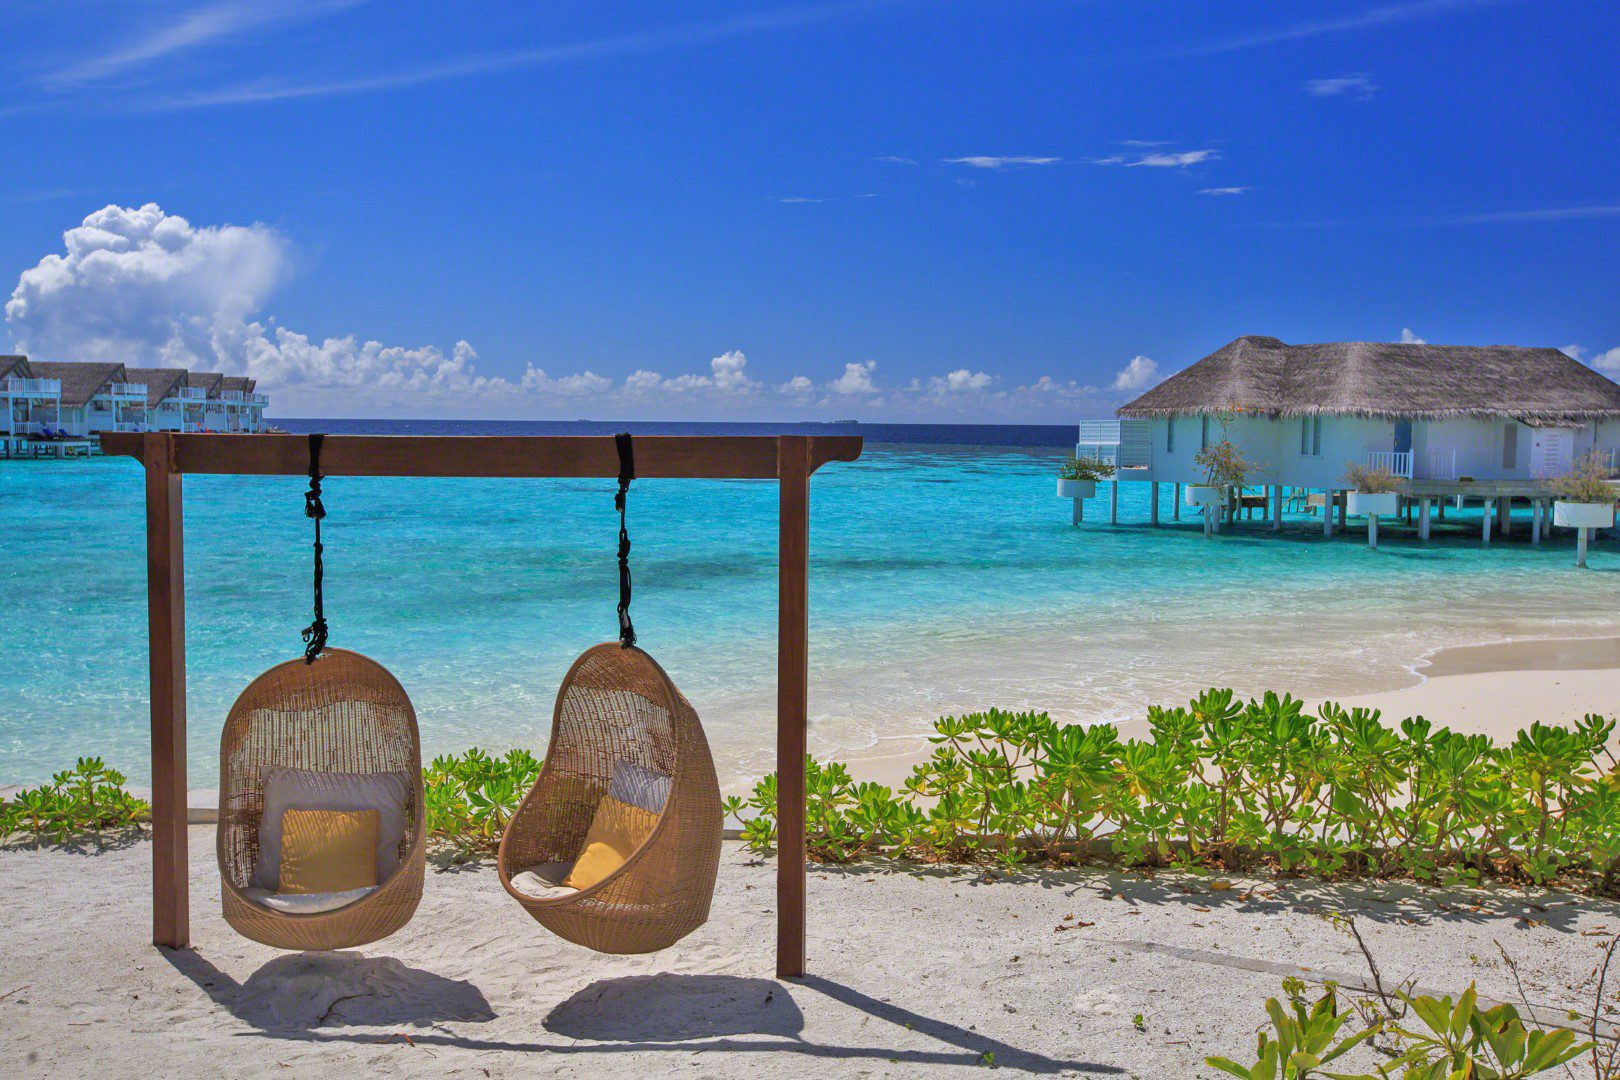 Maldives - WTS Travel & Tours - Tours Packages, Coaches, Cruises & More